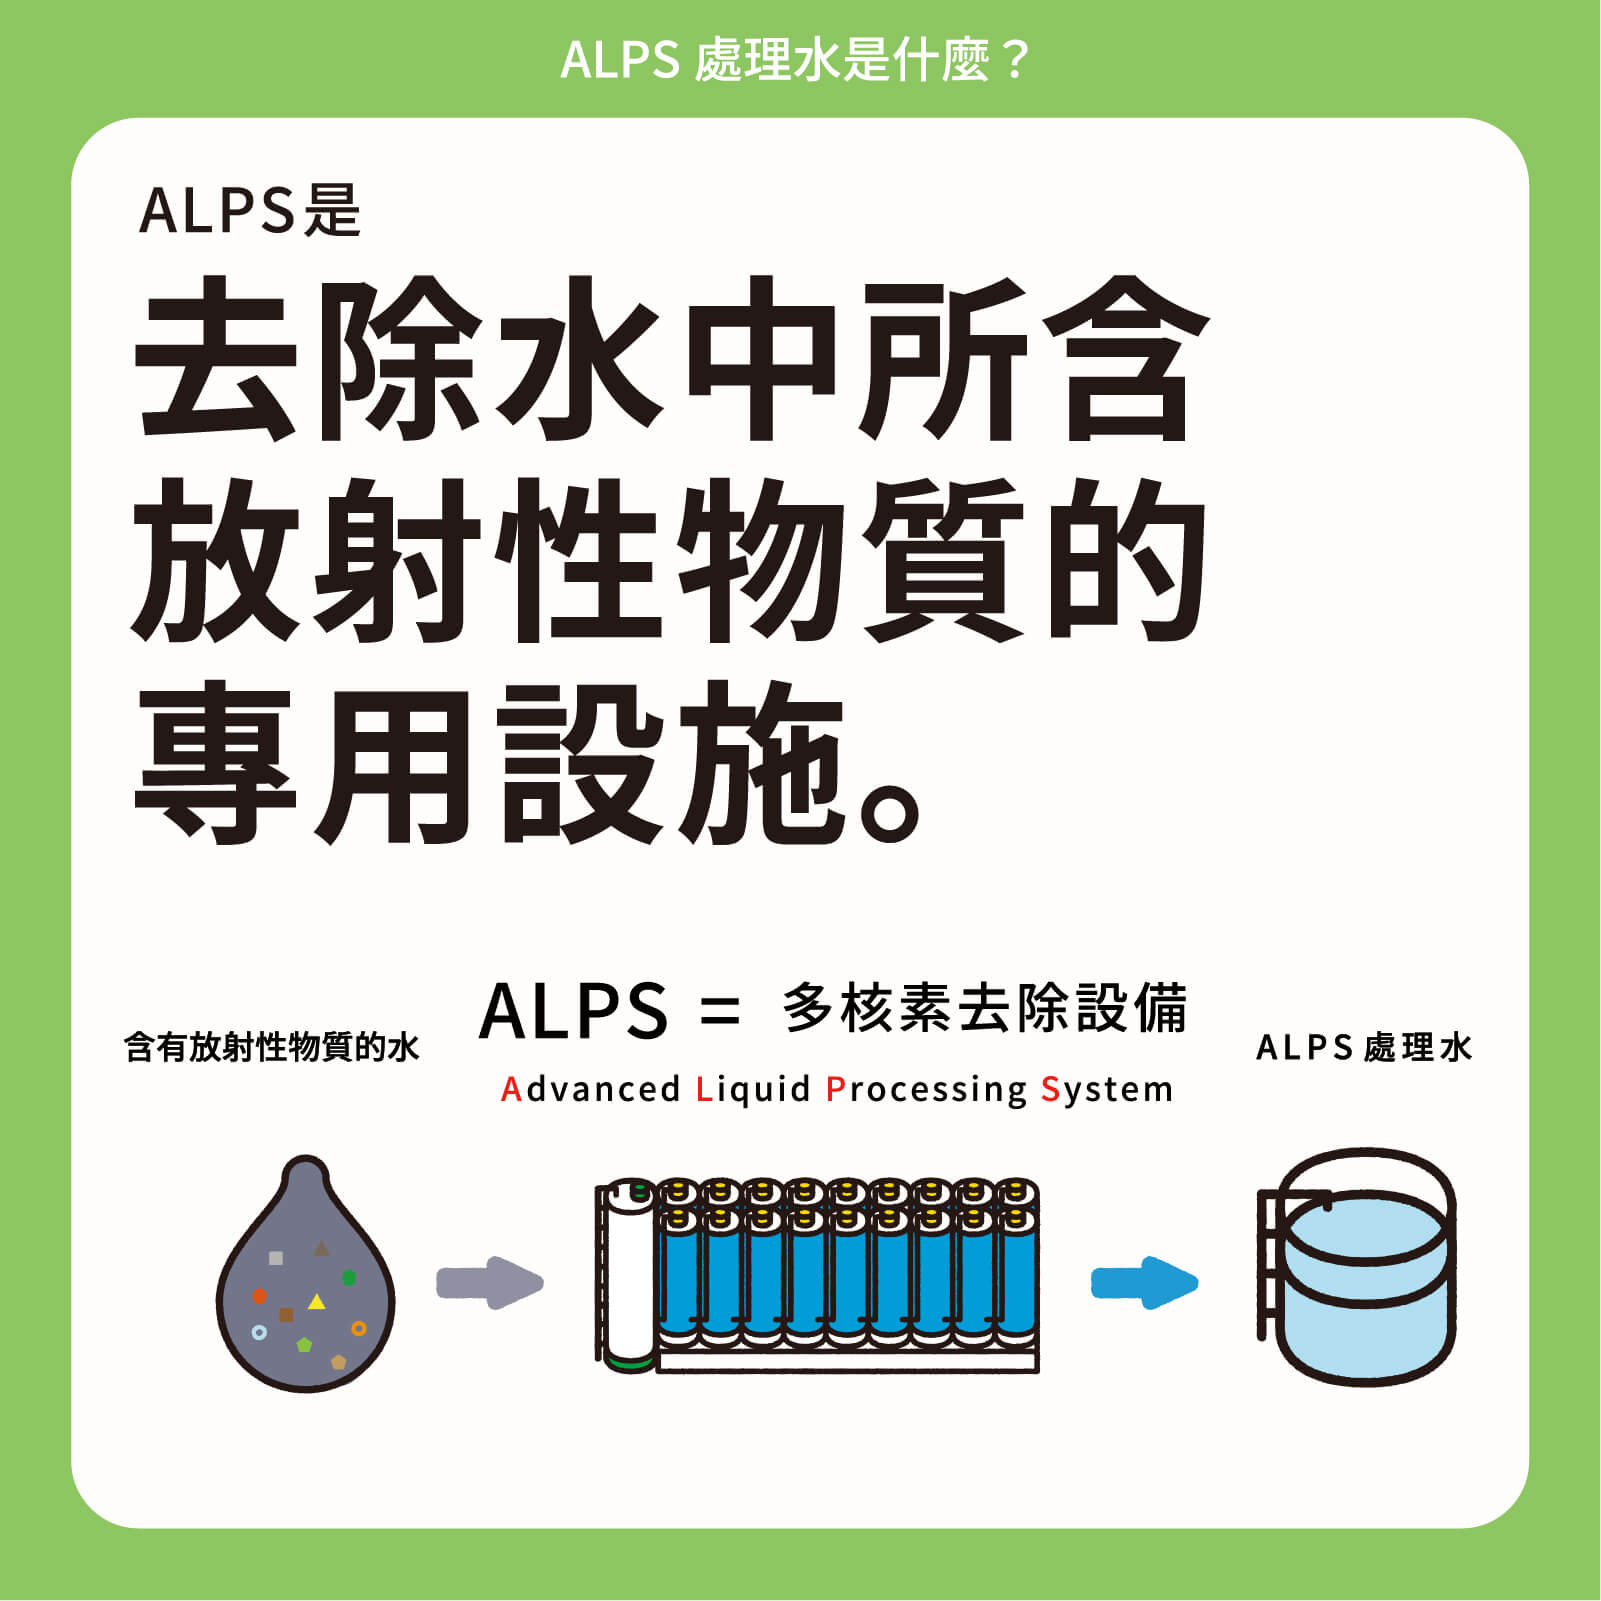 ALPS是去除水中所含放射性物質的專用設施。